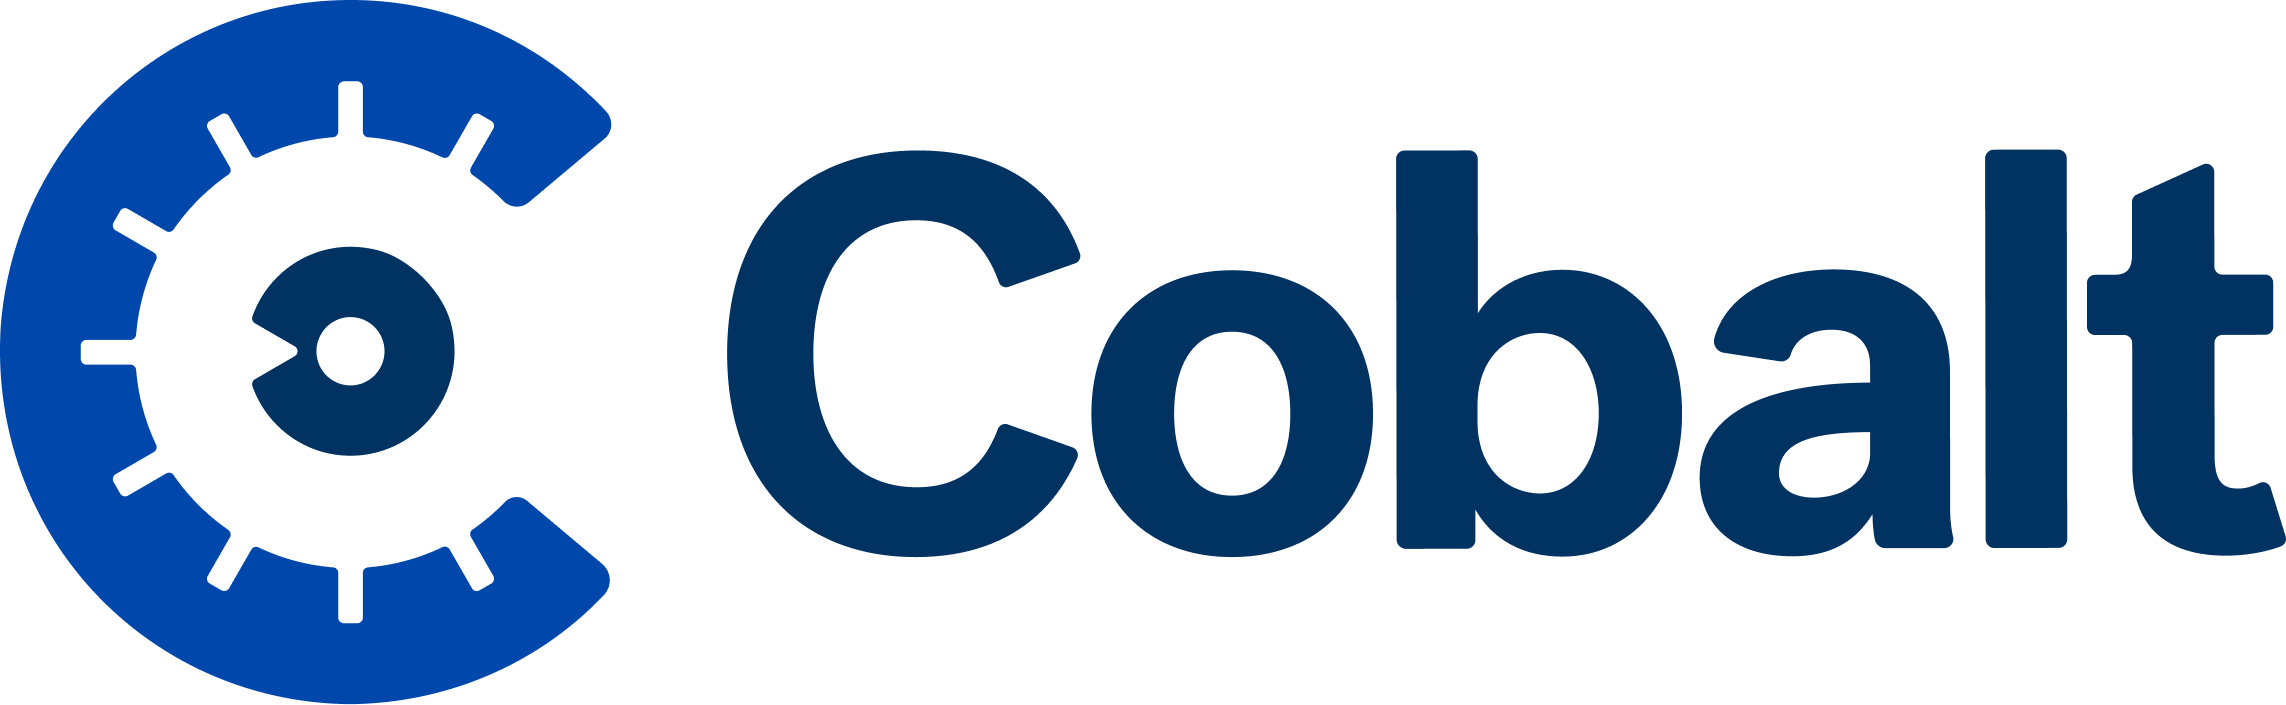 Cobalt Color_Logotype.png